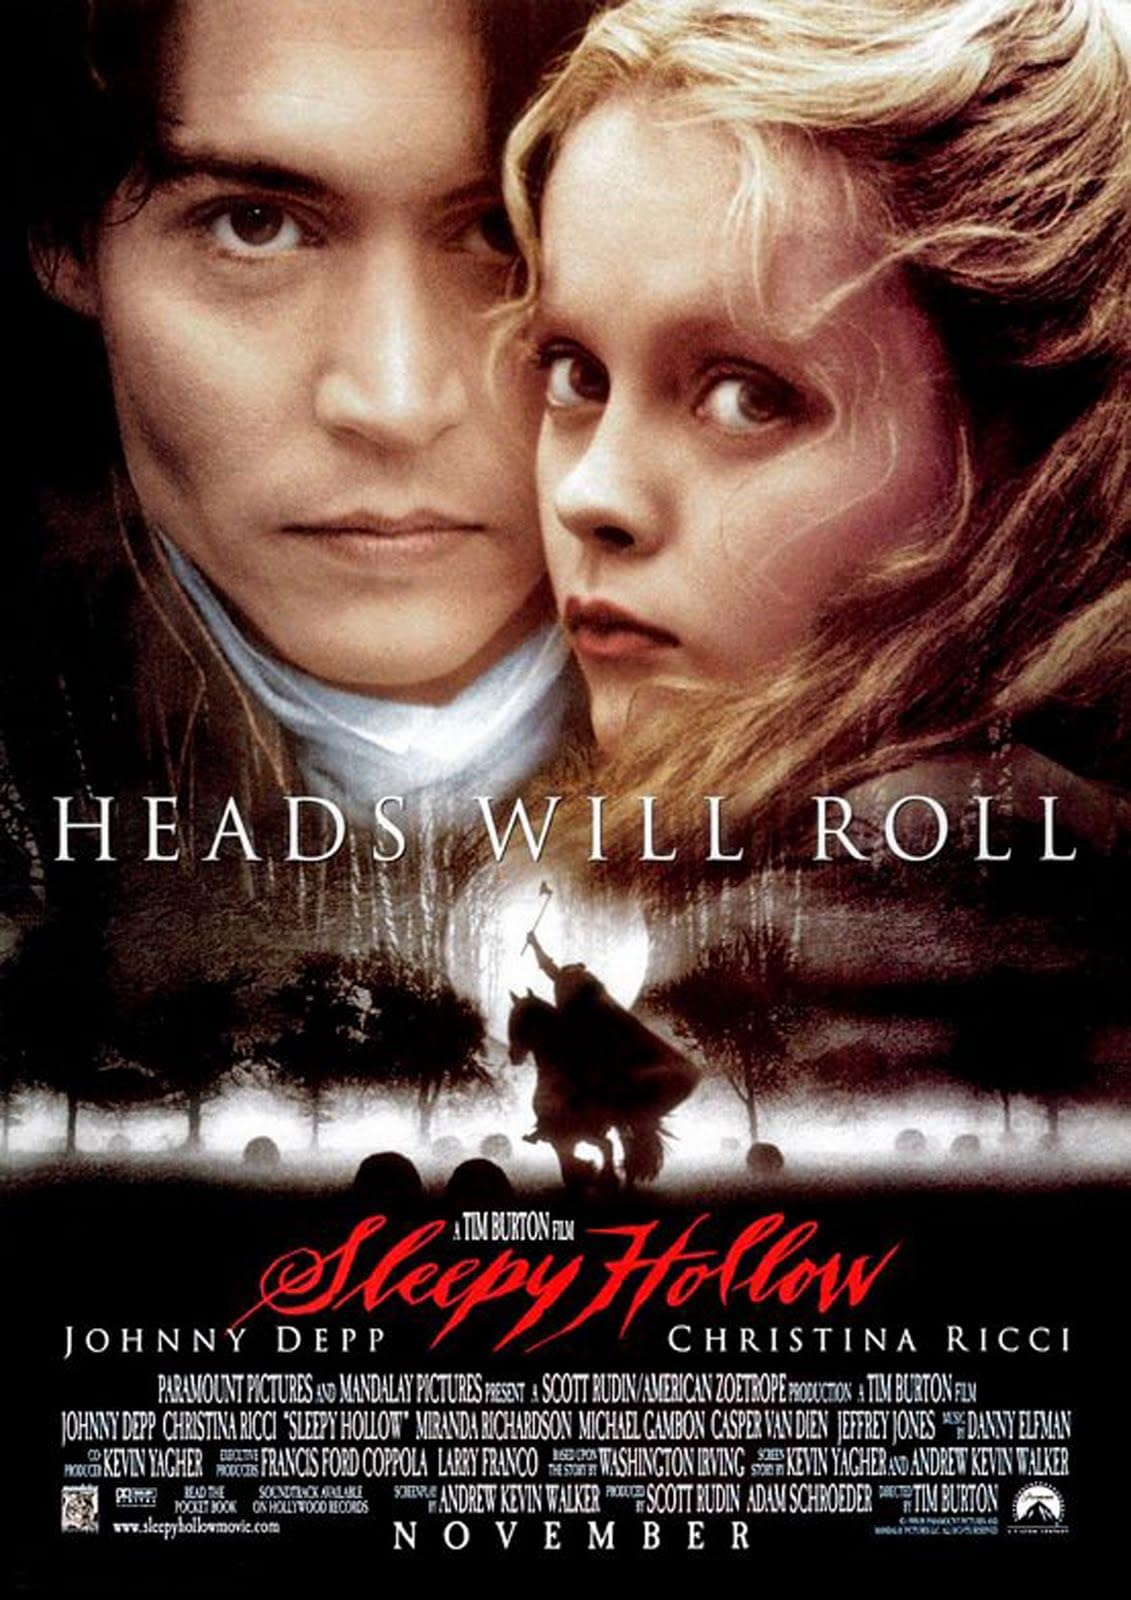 Johnny Depp, Christina Ricci, and Christopher Walken in Il mistero di Sleepy Hollow (1999)